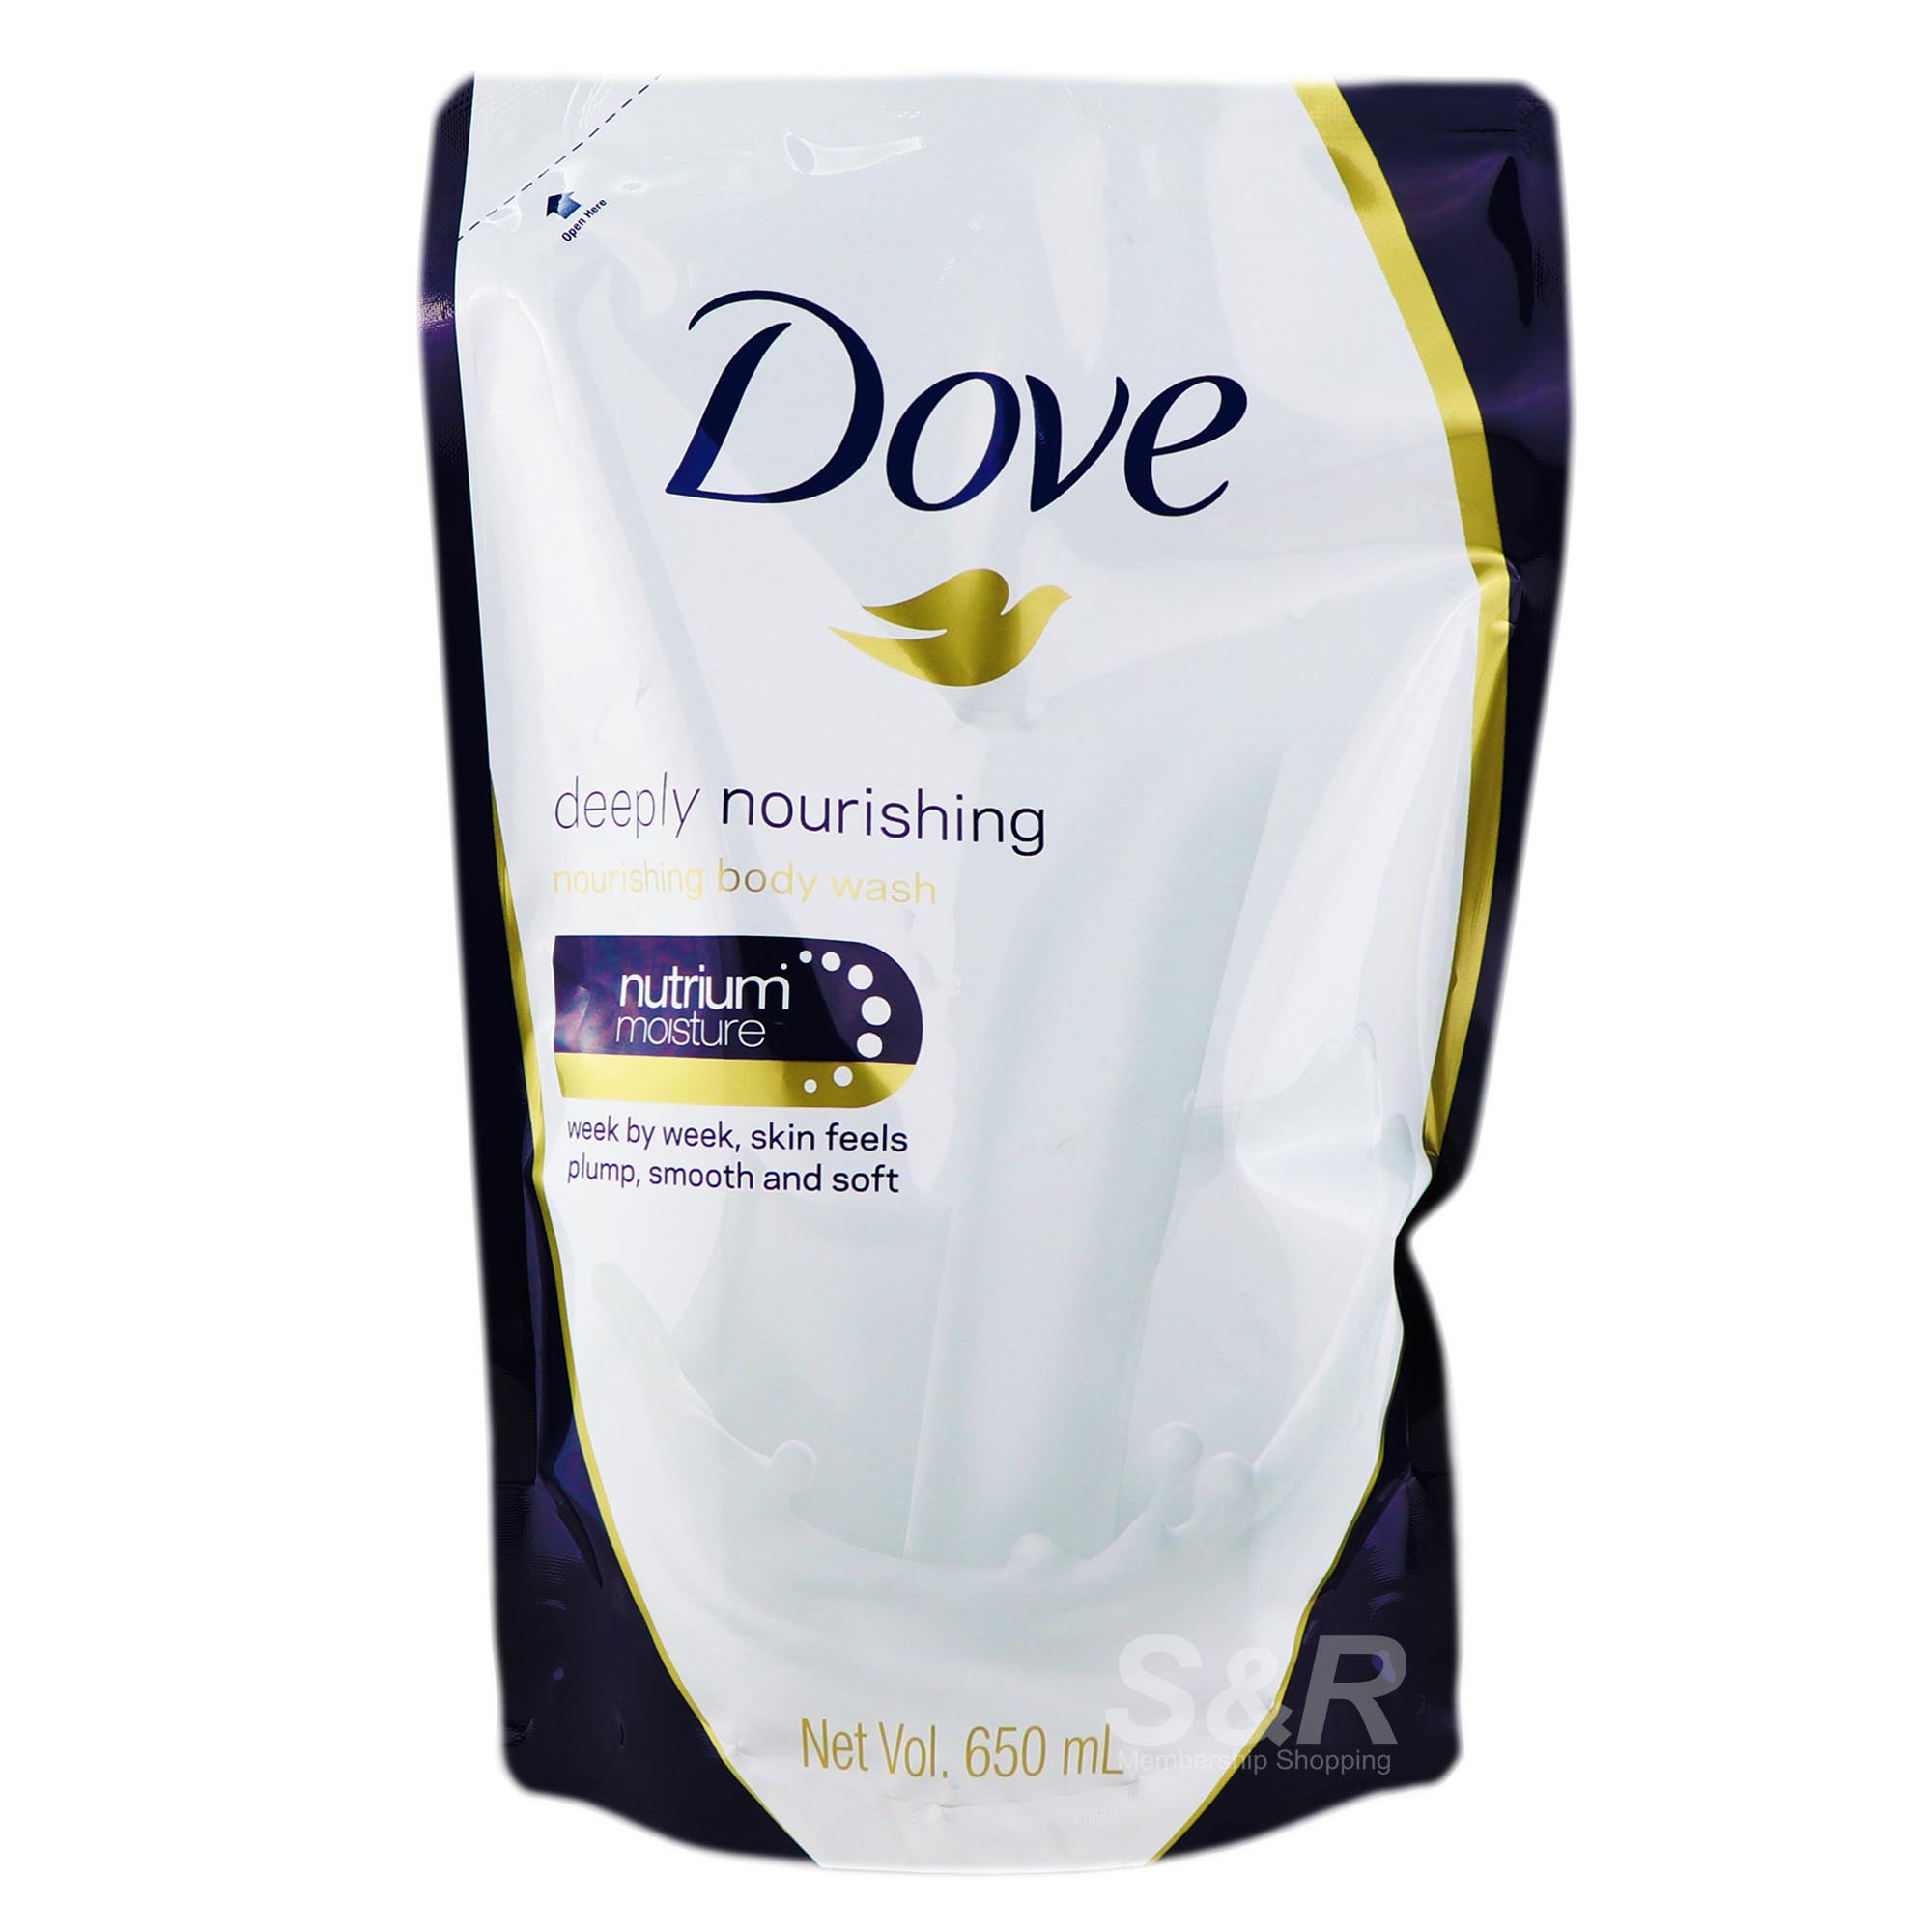 Dove Deeply Nourishing Body Wash Refill 650mL